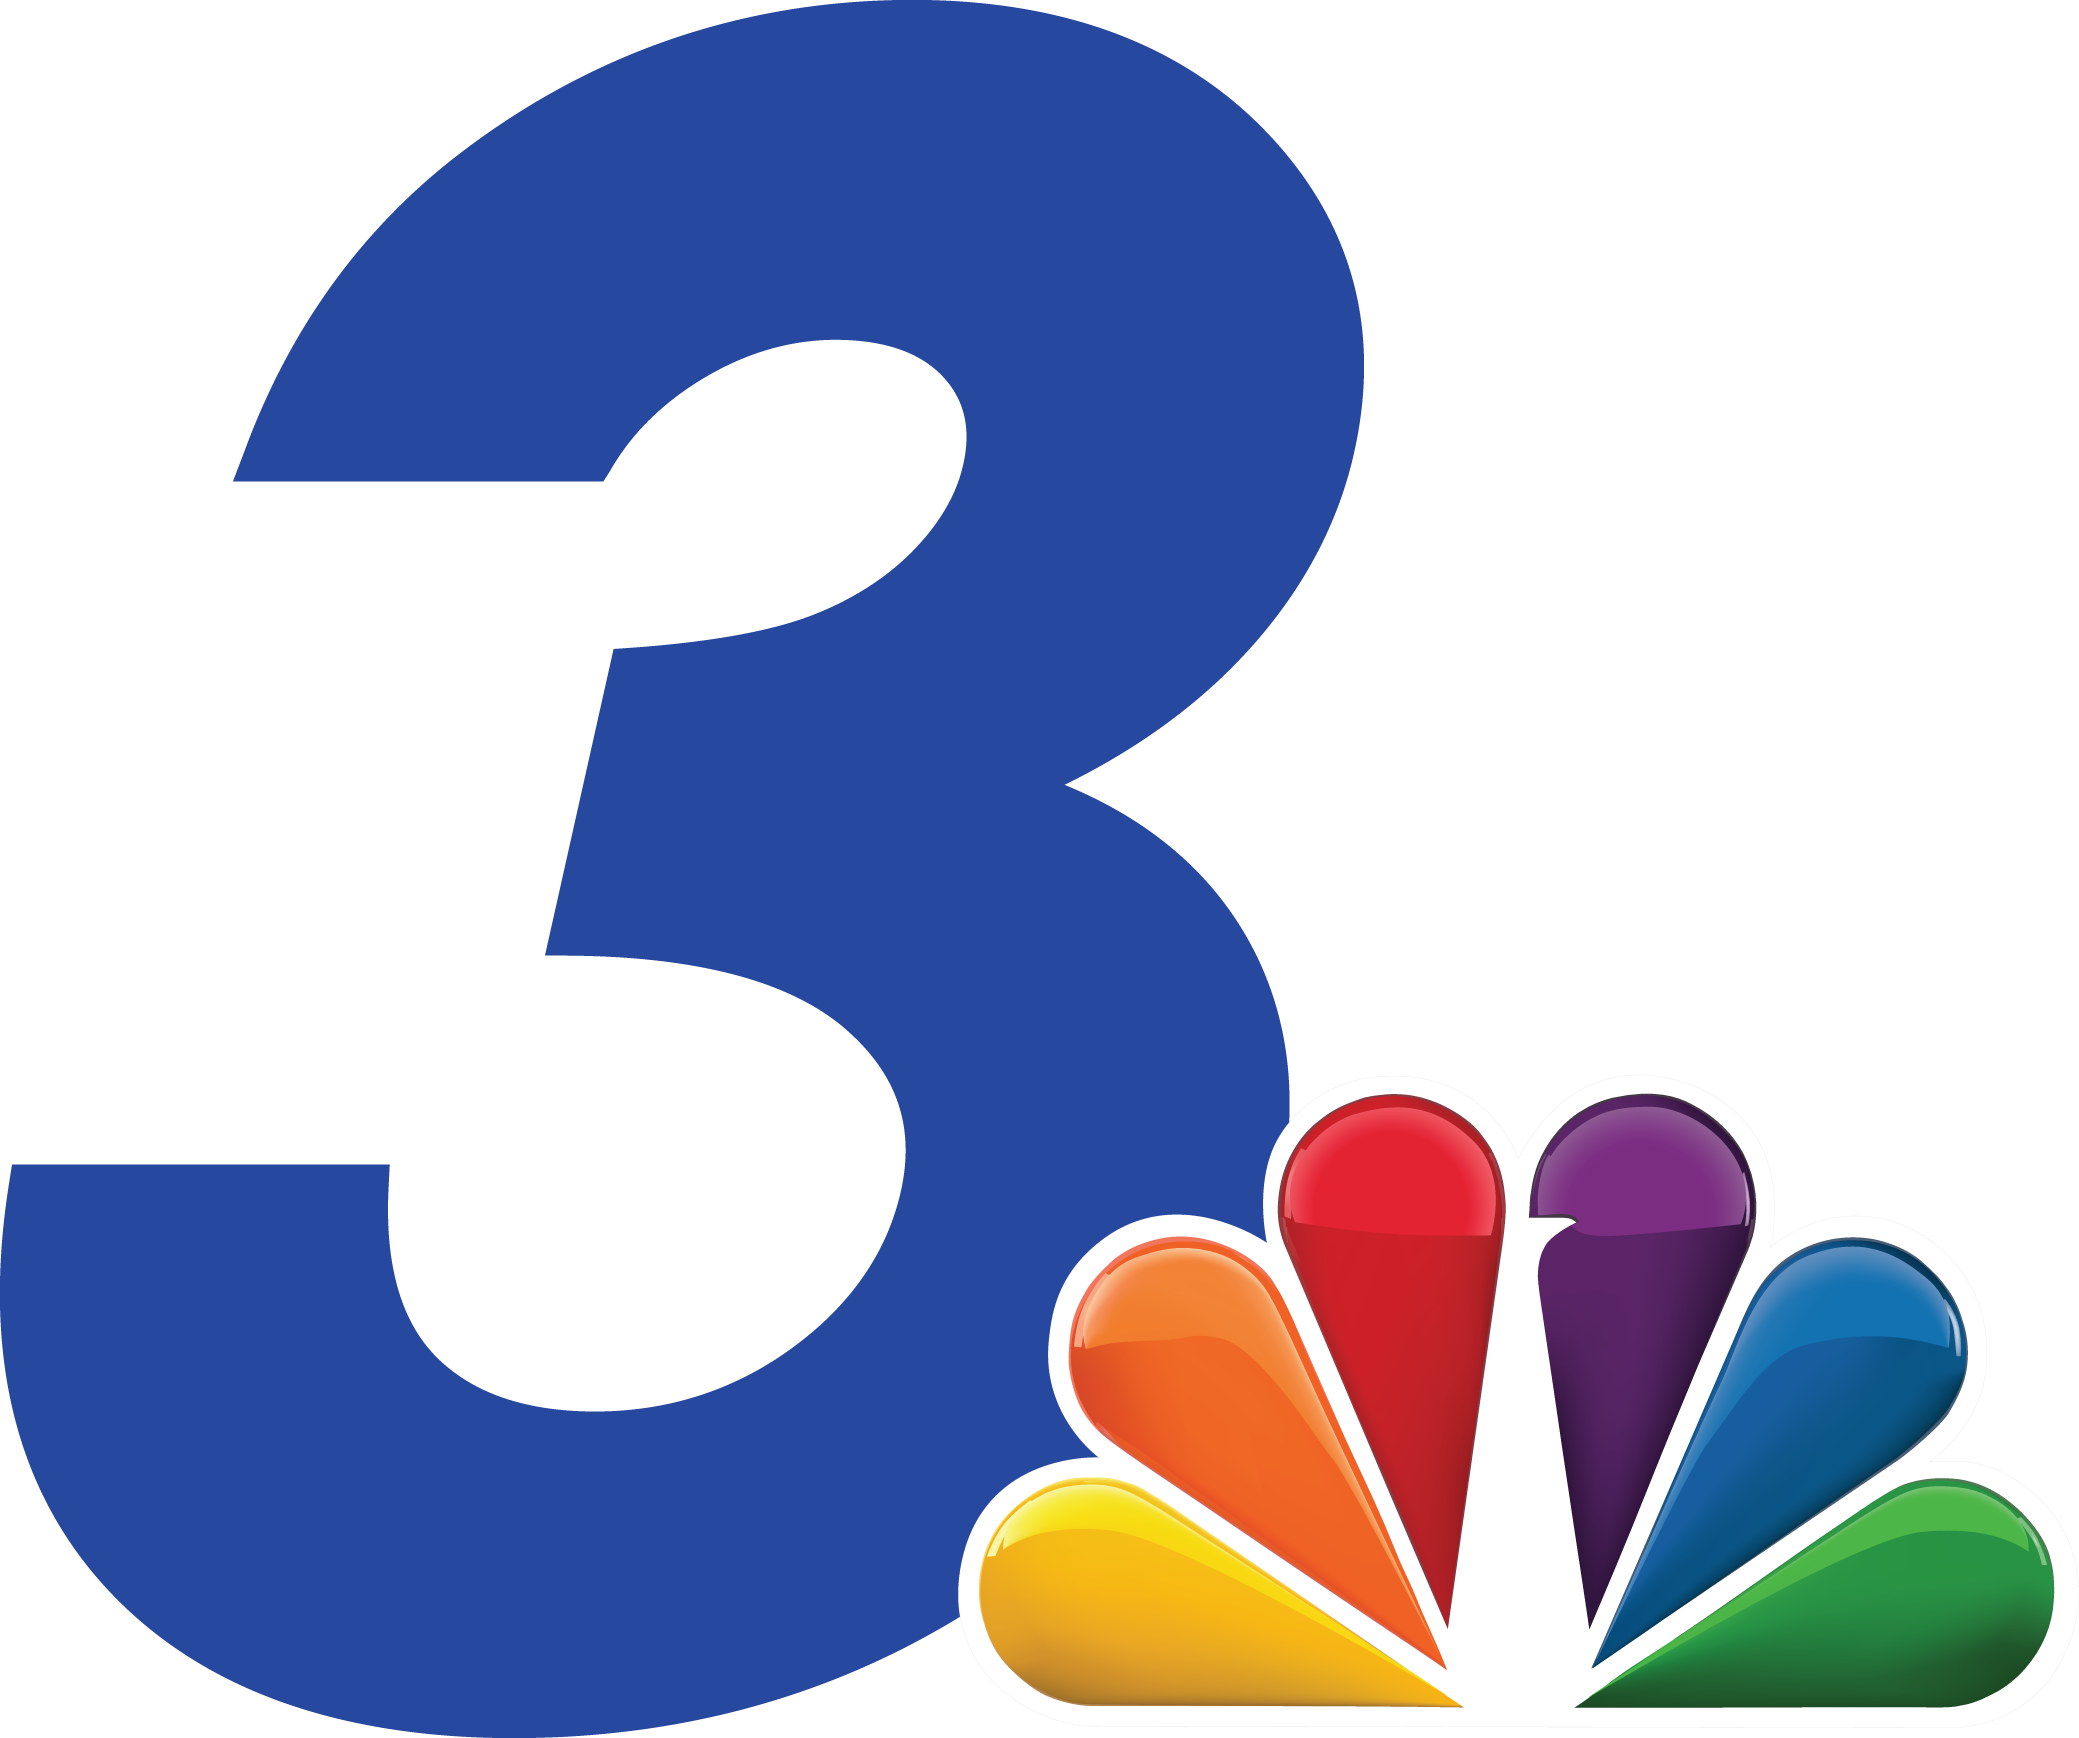 5. NBC (Medios)